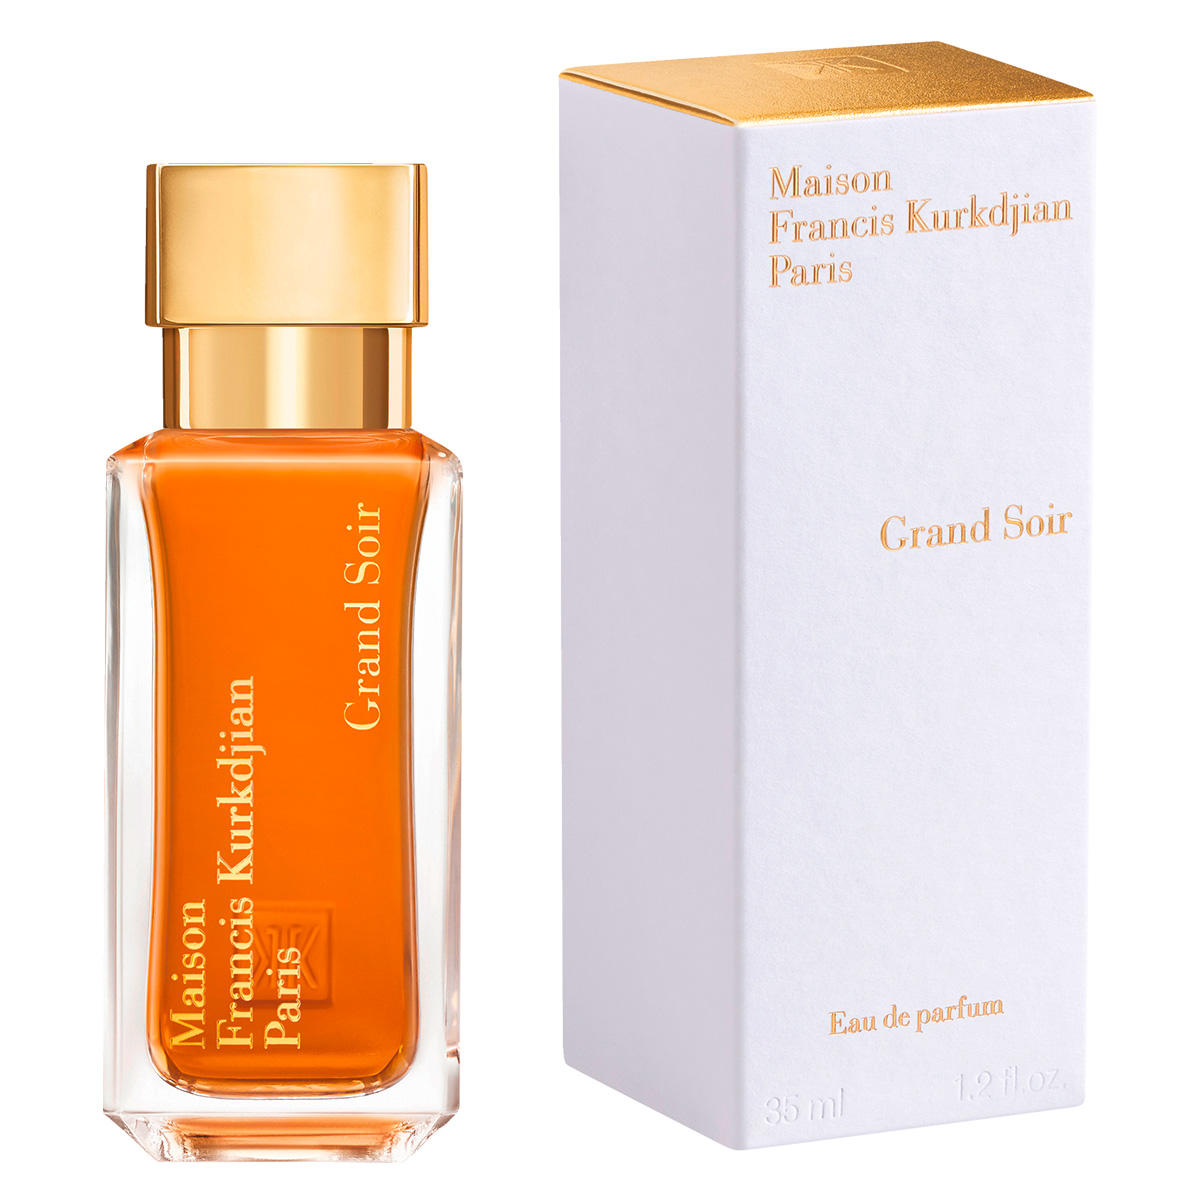 Maison Francis Kurkdjian Paris Grand Soir Eau de Parfum 35 ml - 2